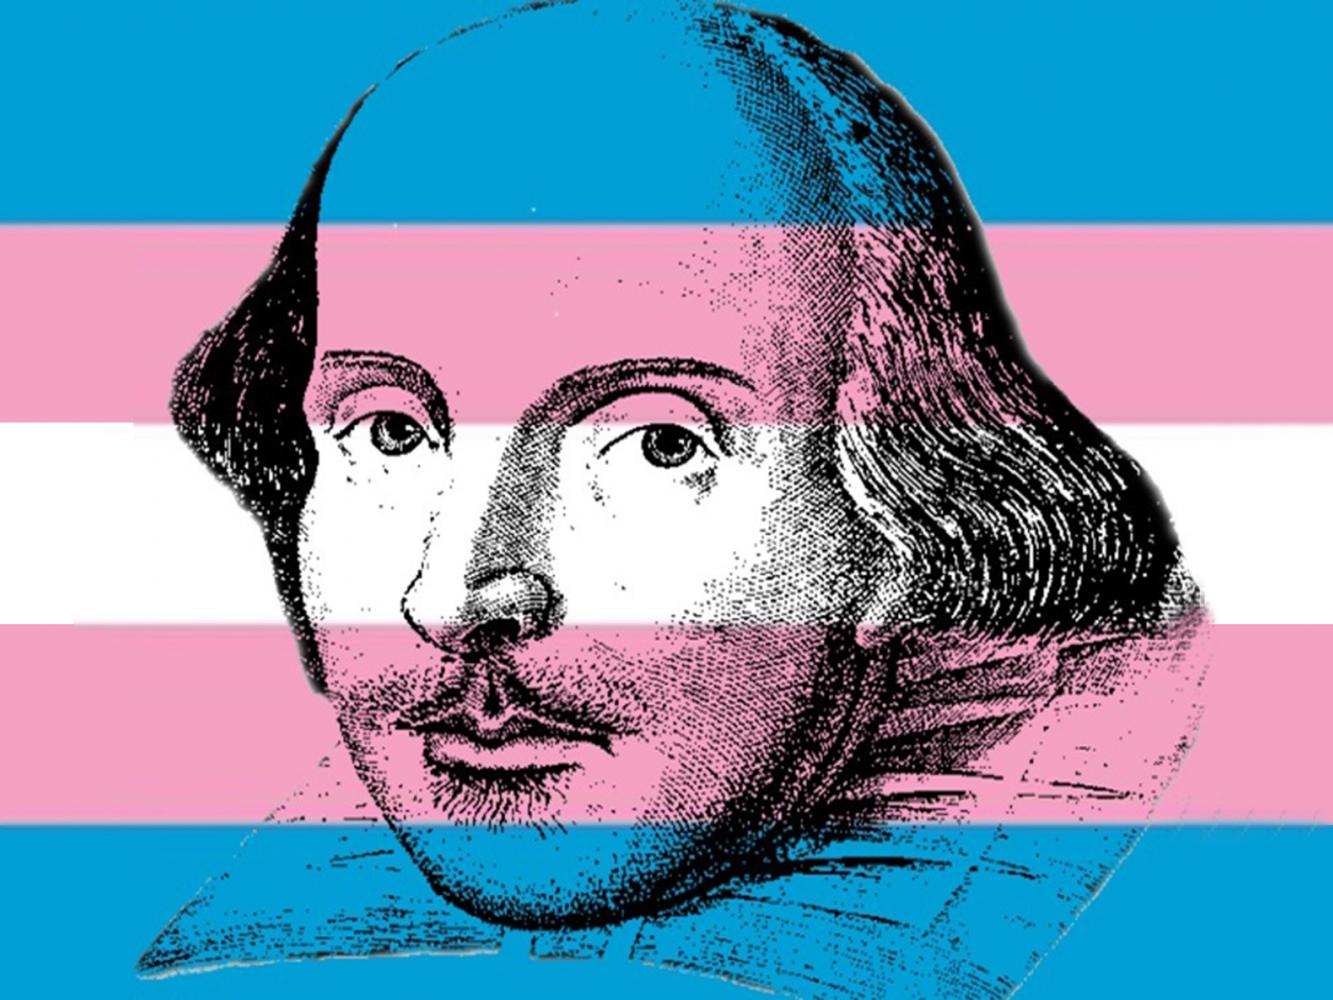 Shakespeare overlaid with the Transgender flag